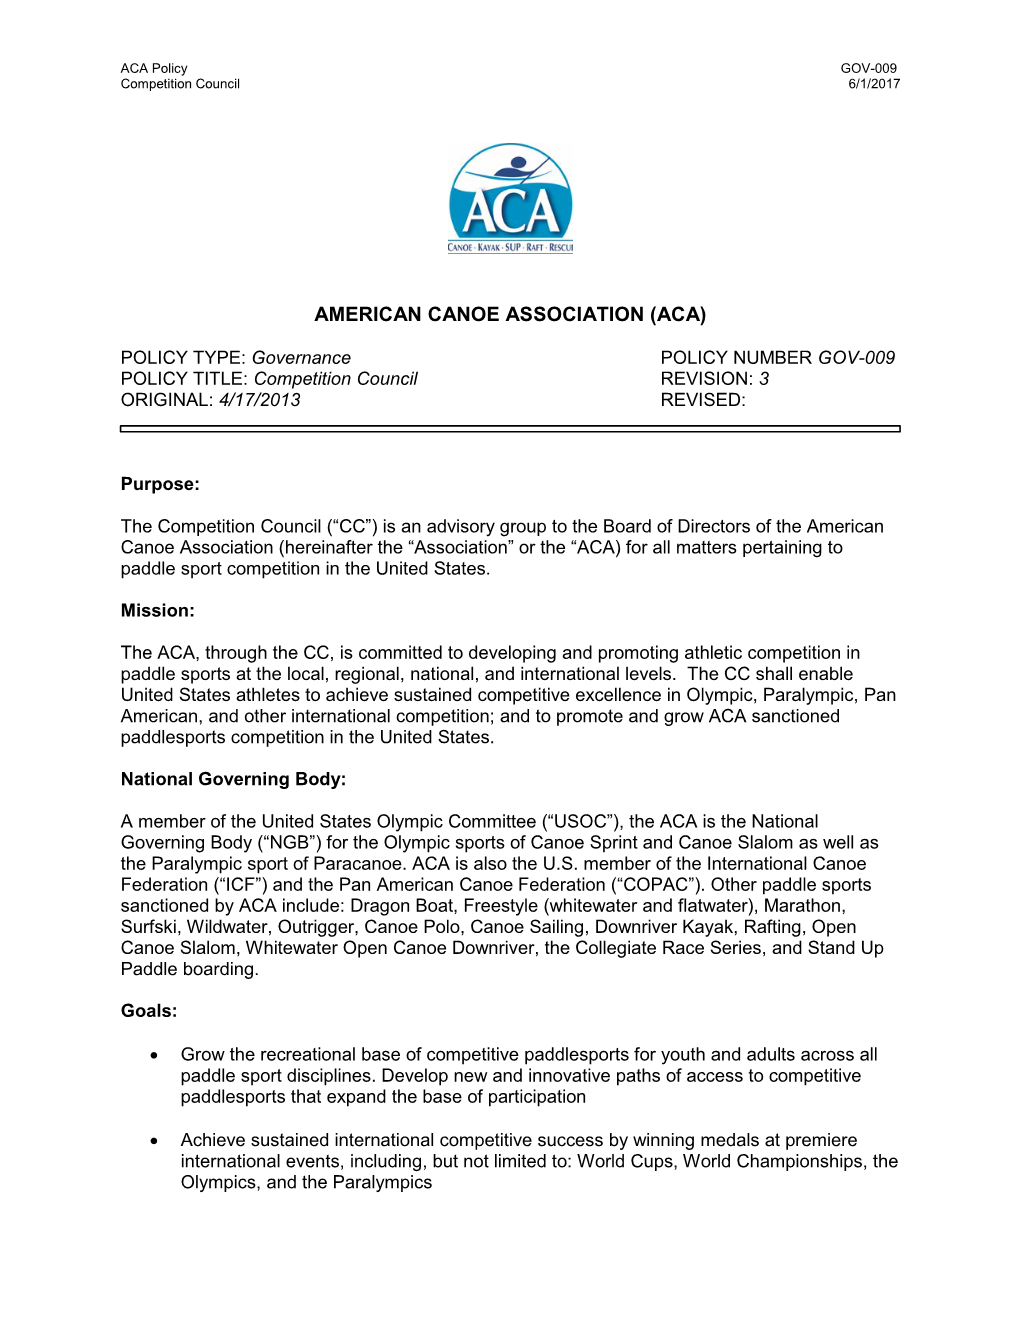 American Canoe Association (Aca)